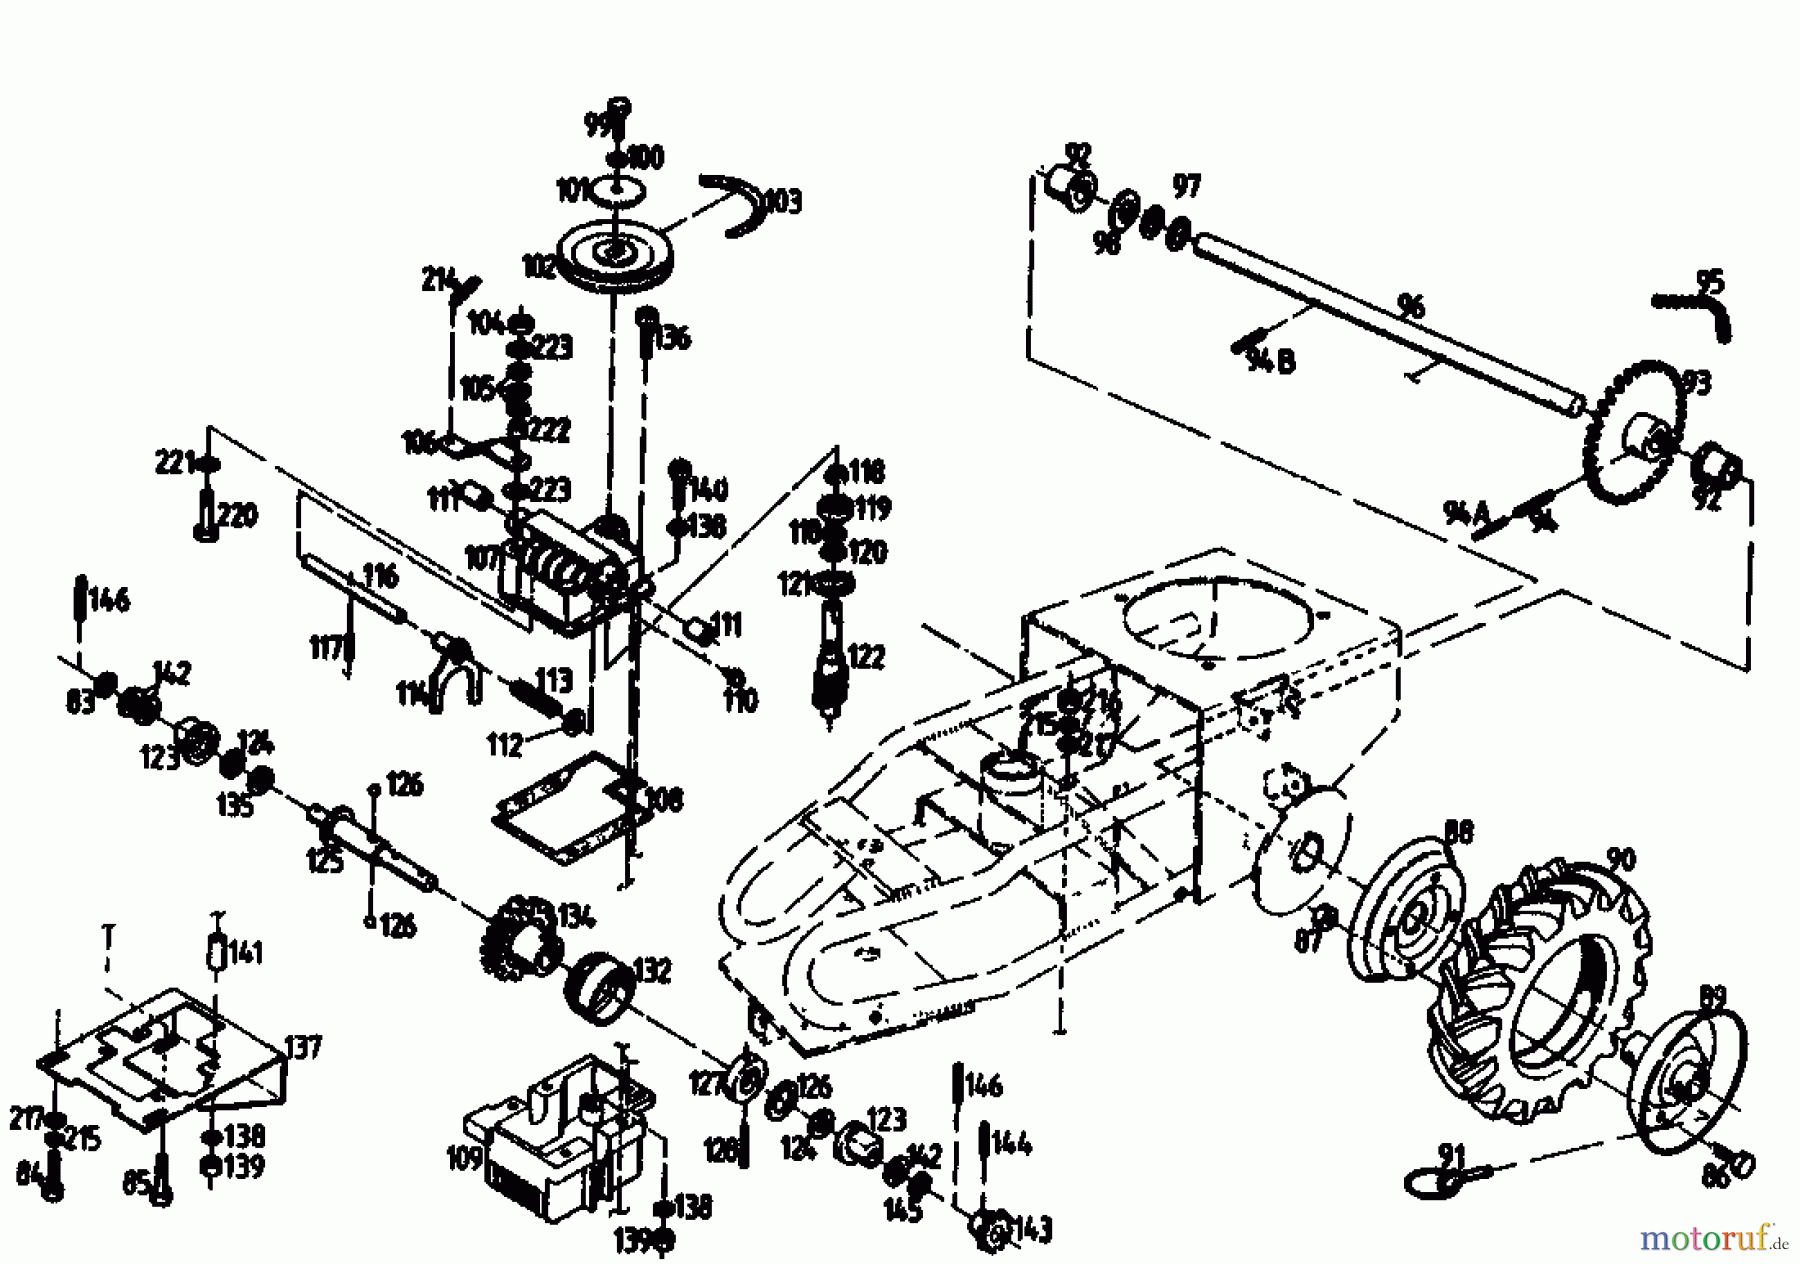  Gutbrod Balkenmäher BM 710 07515.01  (1989) Getriebe, Räder